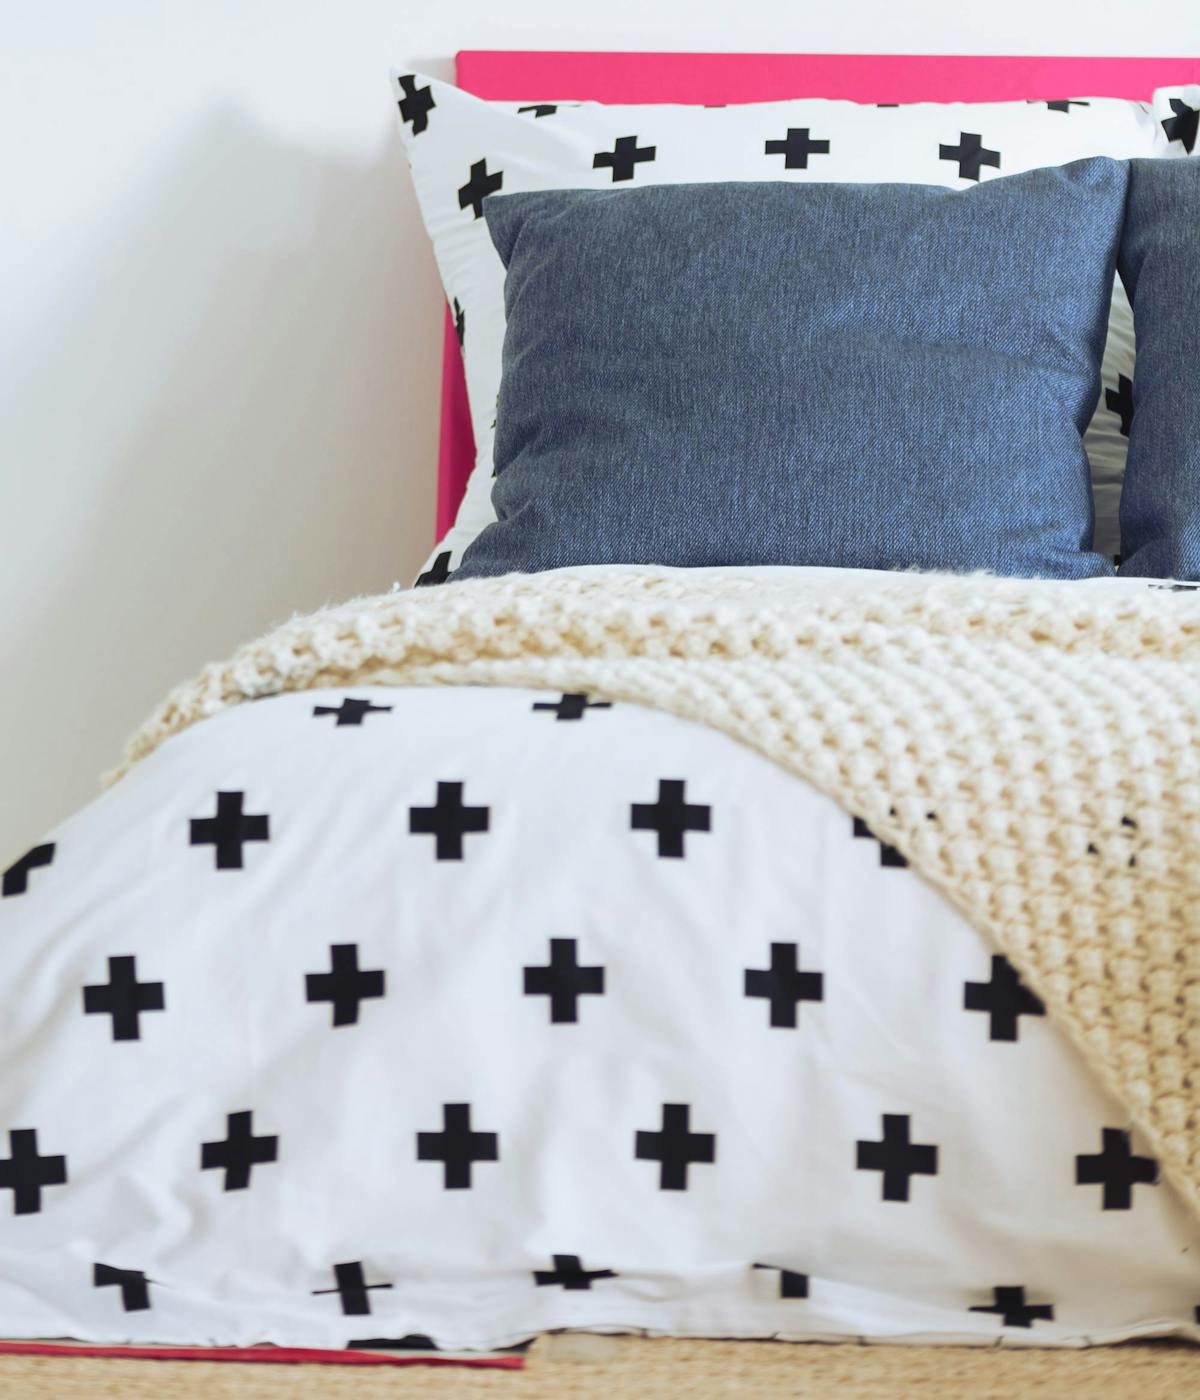  monochromatic geometric bedspread on double bed